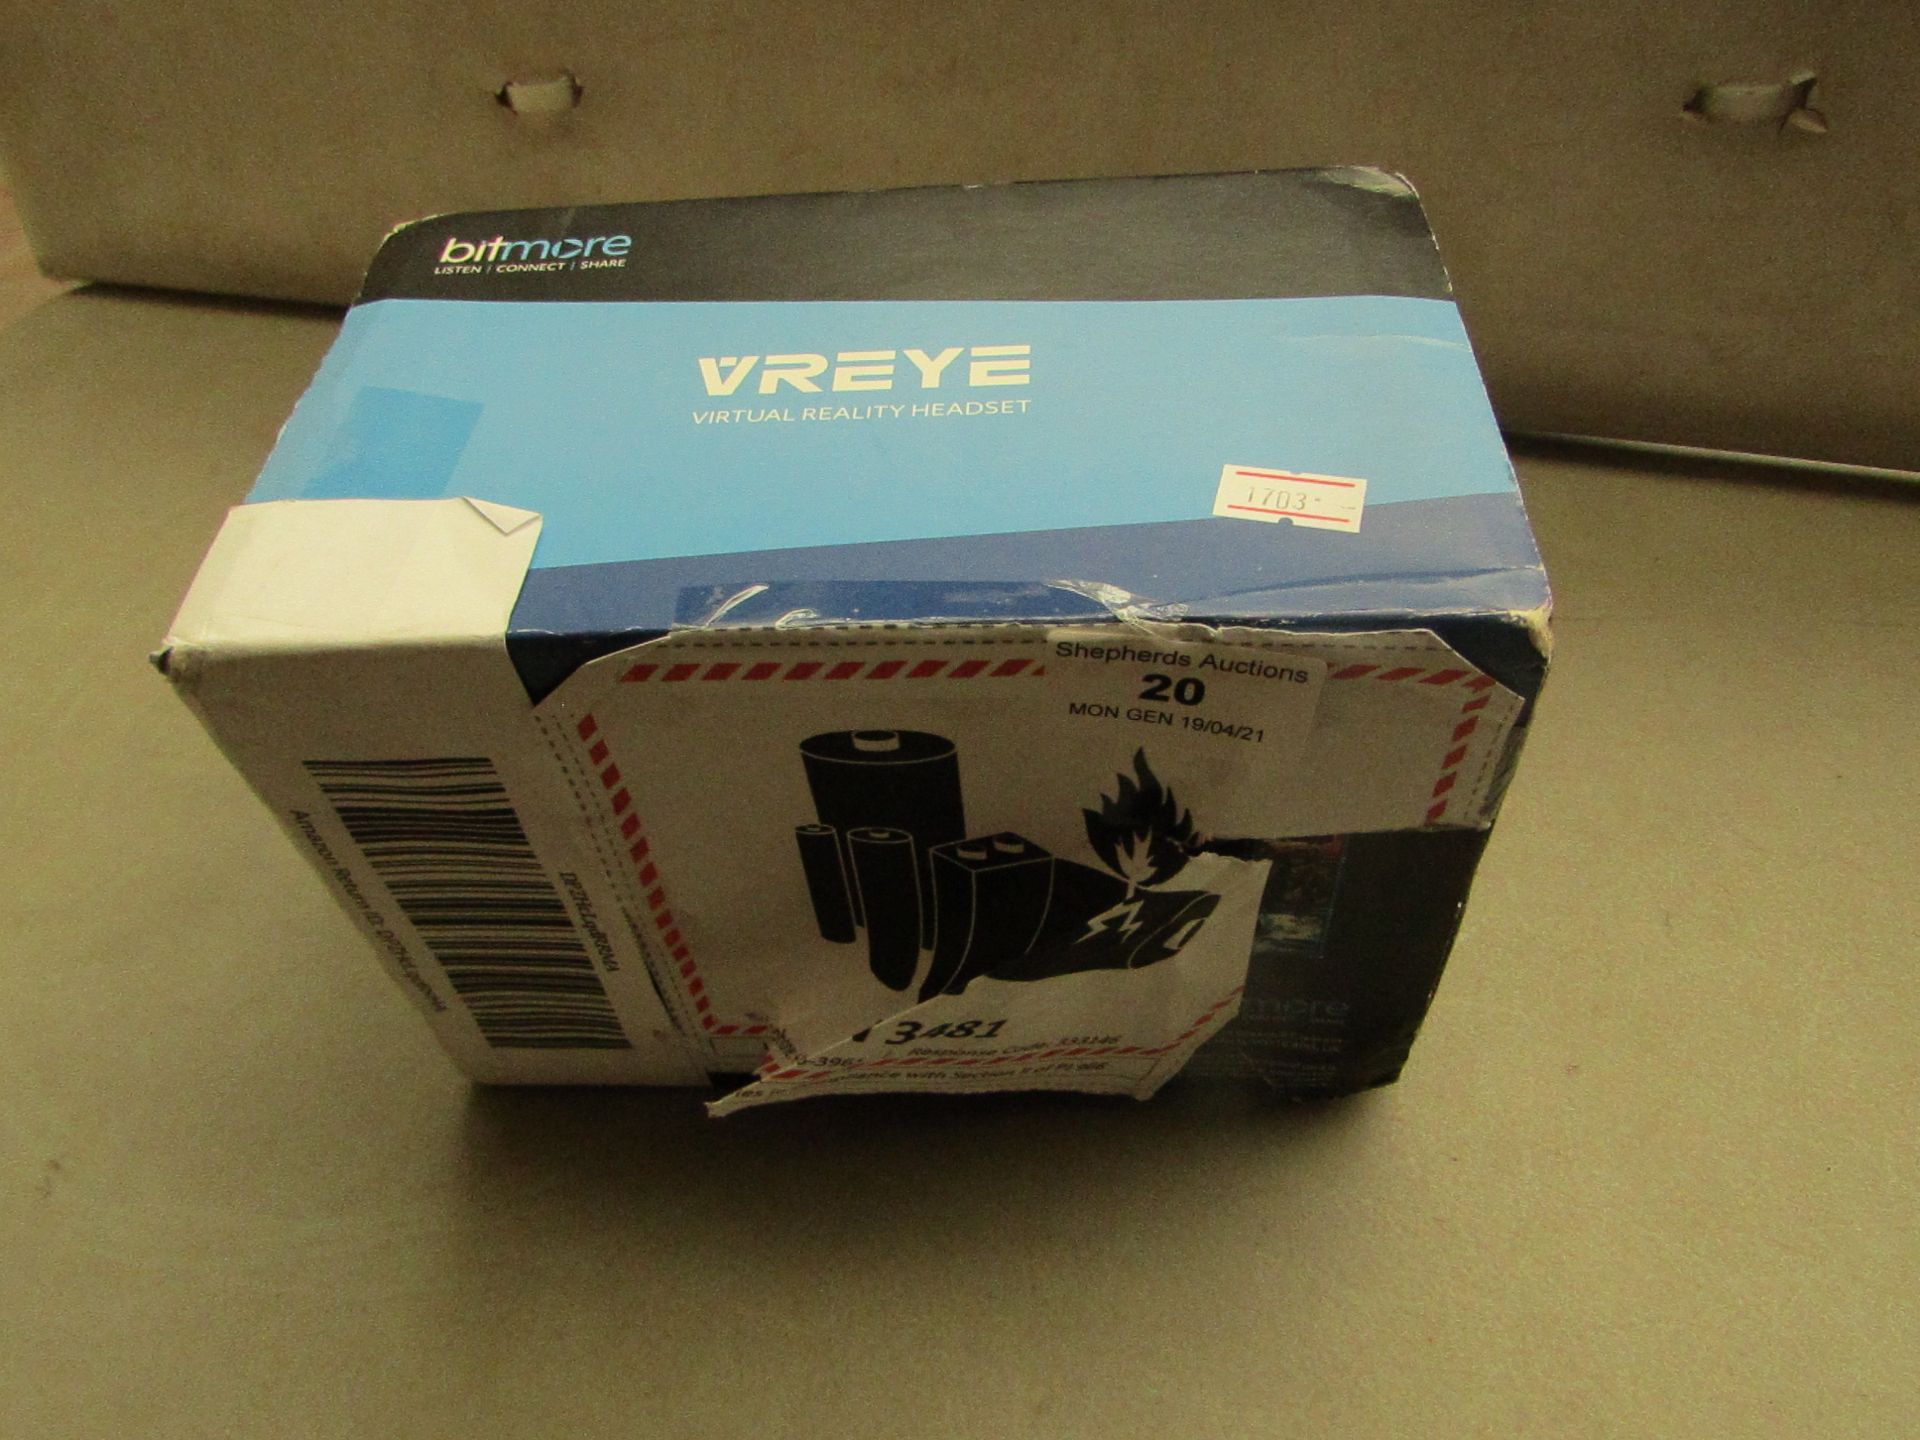 Bitmore - VREYE Virtual Reality Headset - Unchecked & Boxed.